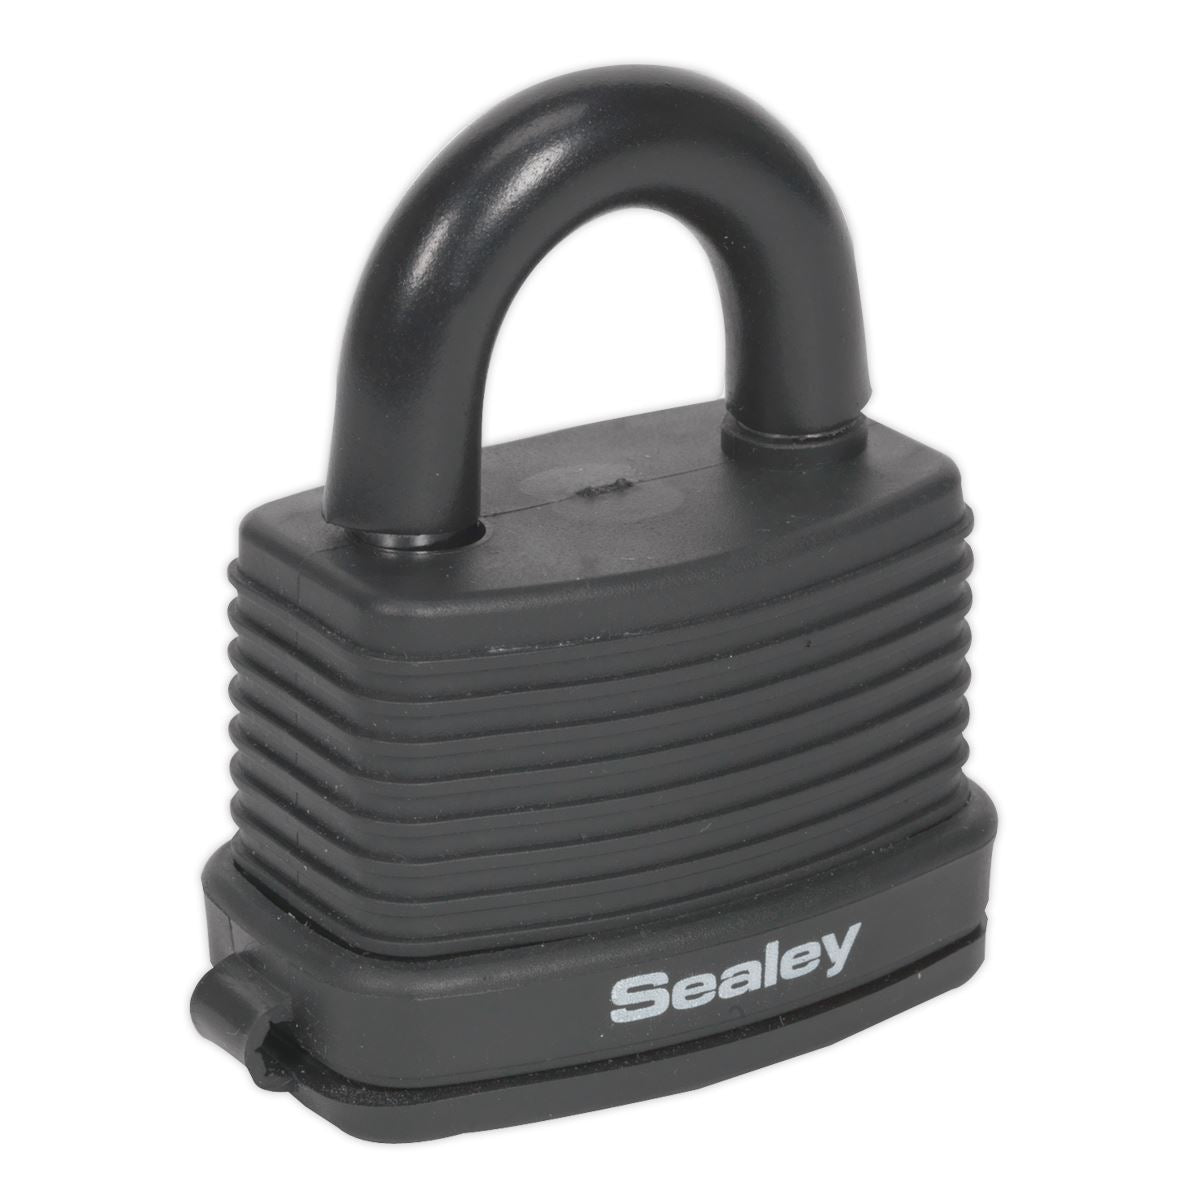 Sealey Steel Body Weatherproof Combination Padlock 48mm